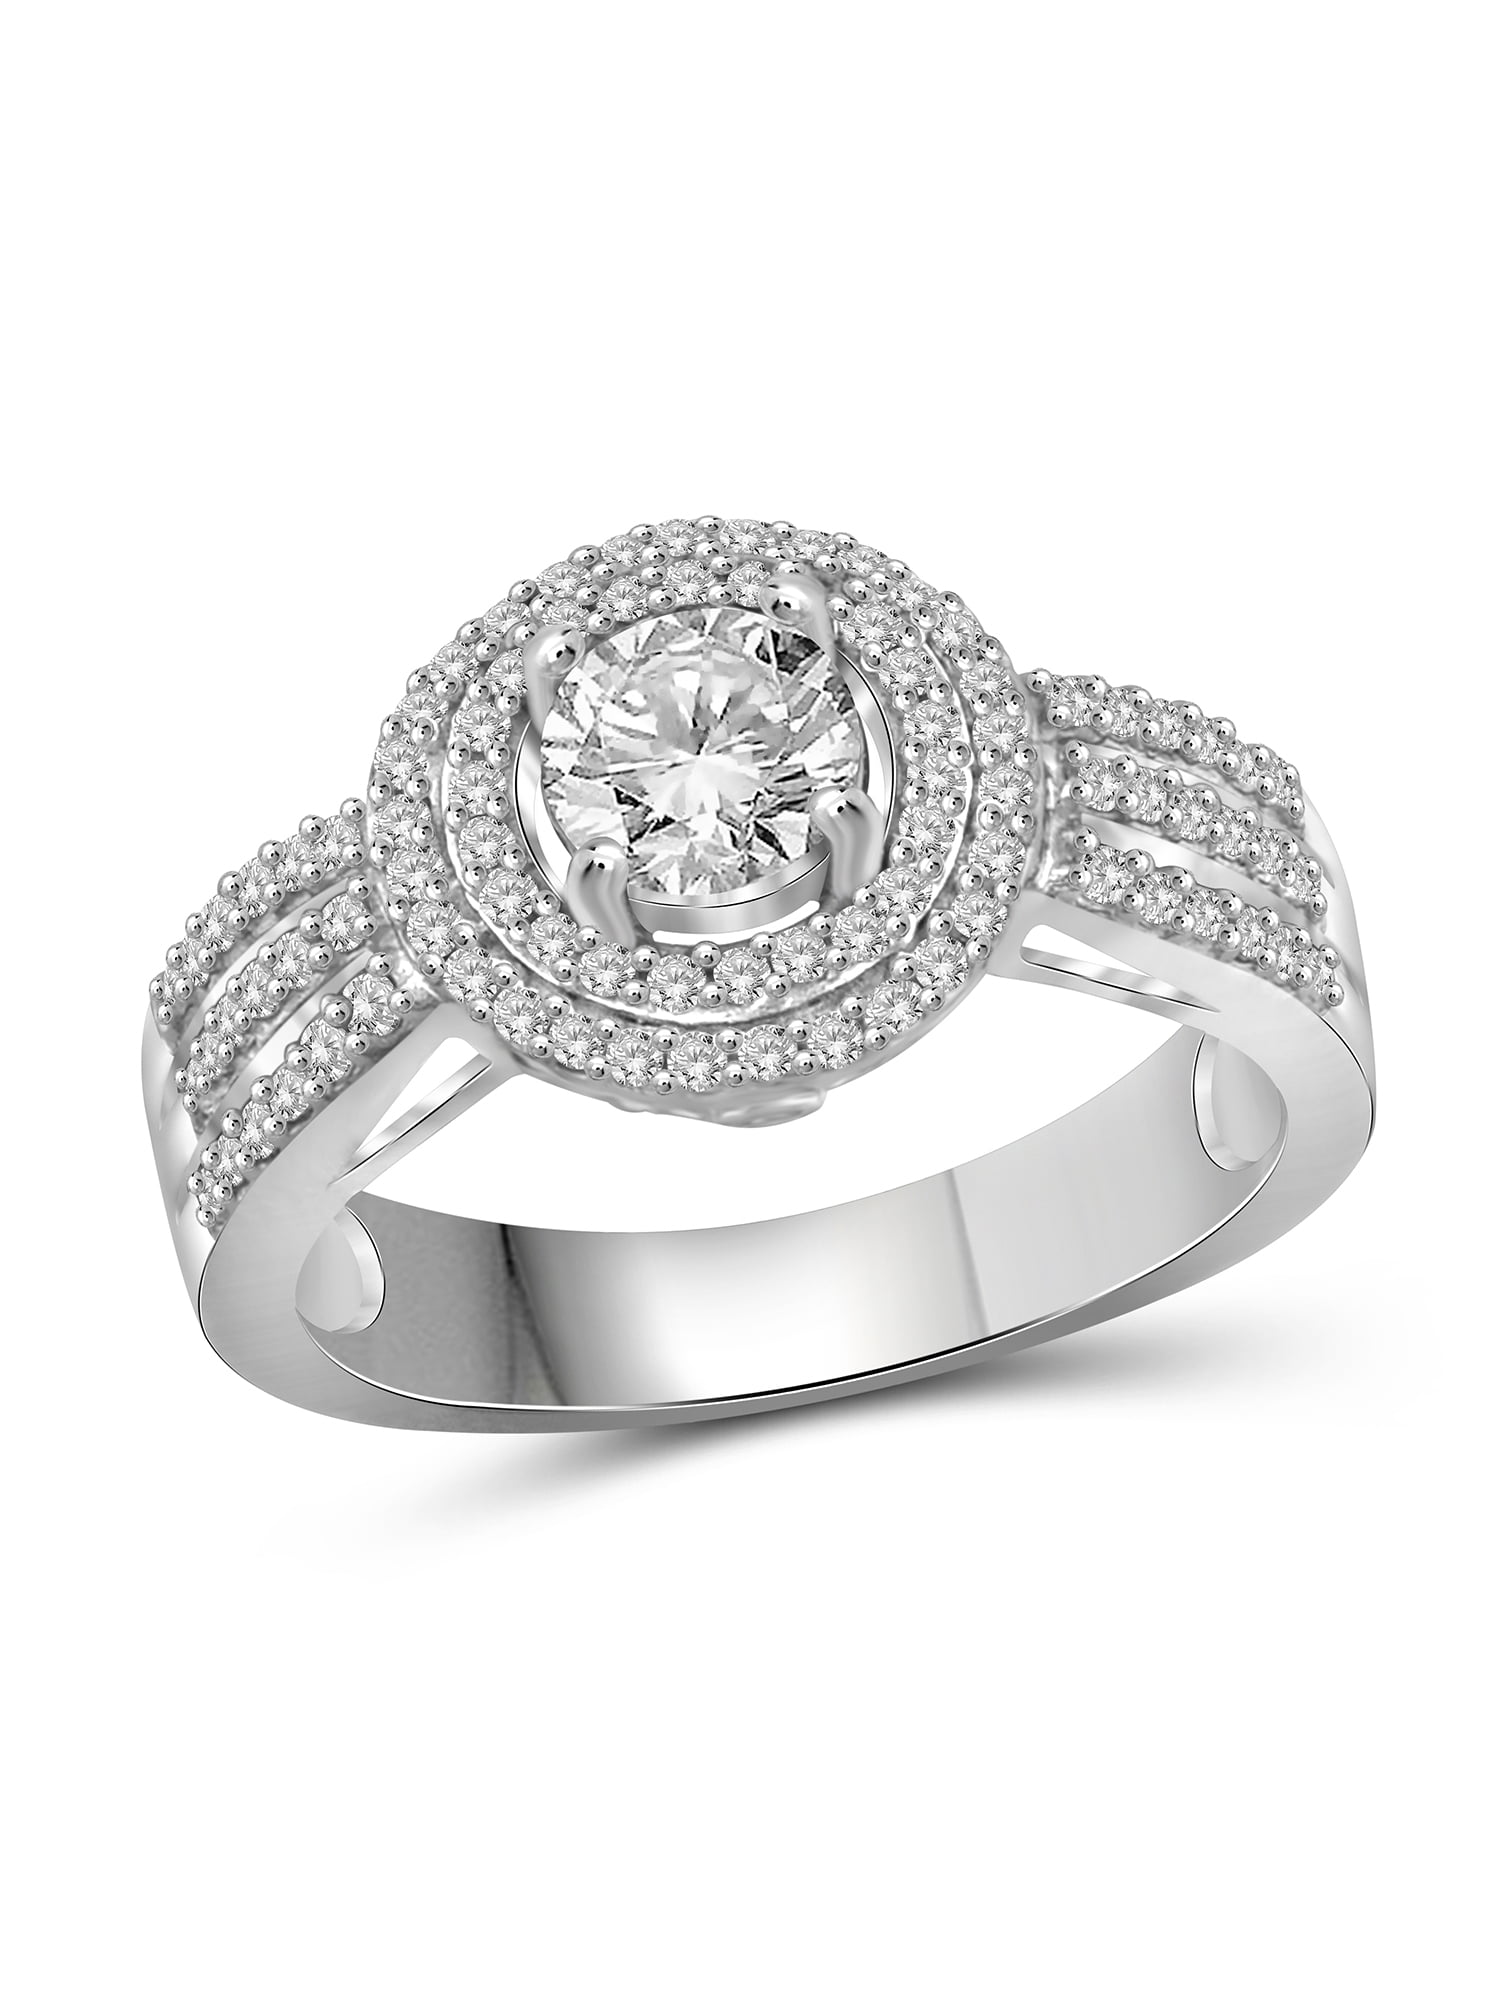 Women Round Cut Cubic Zirconia Black Stainless Steel 316 Wedding Band Engagement  Ring Set Sizes 5 to 10 - Walmart.com